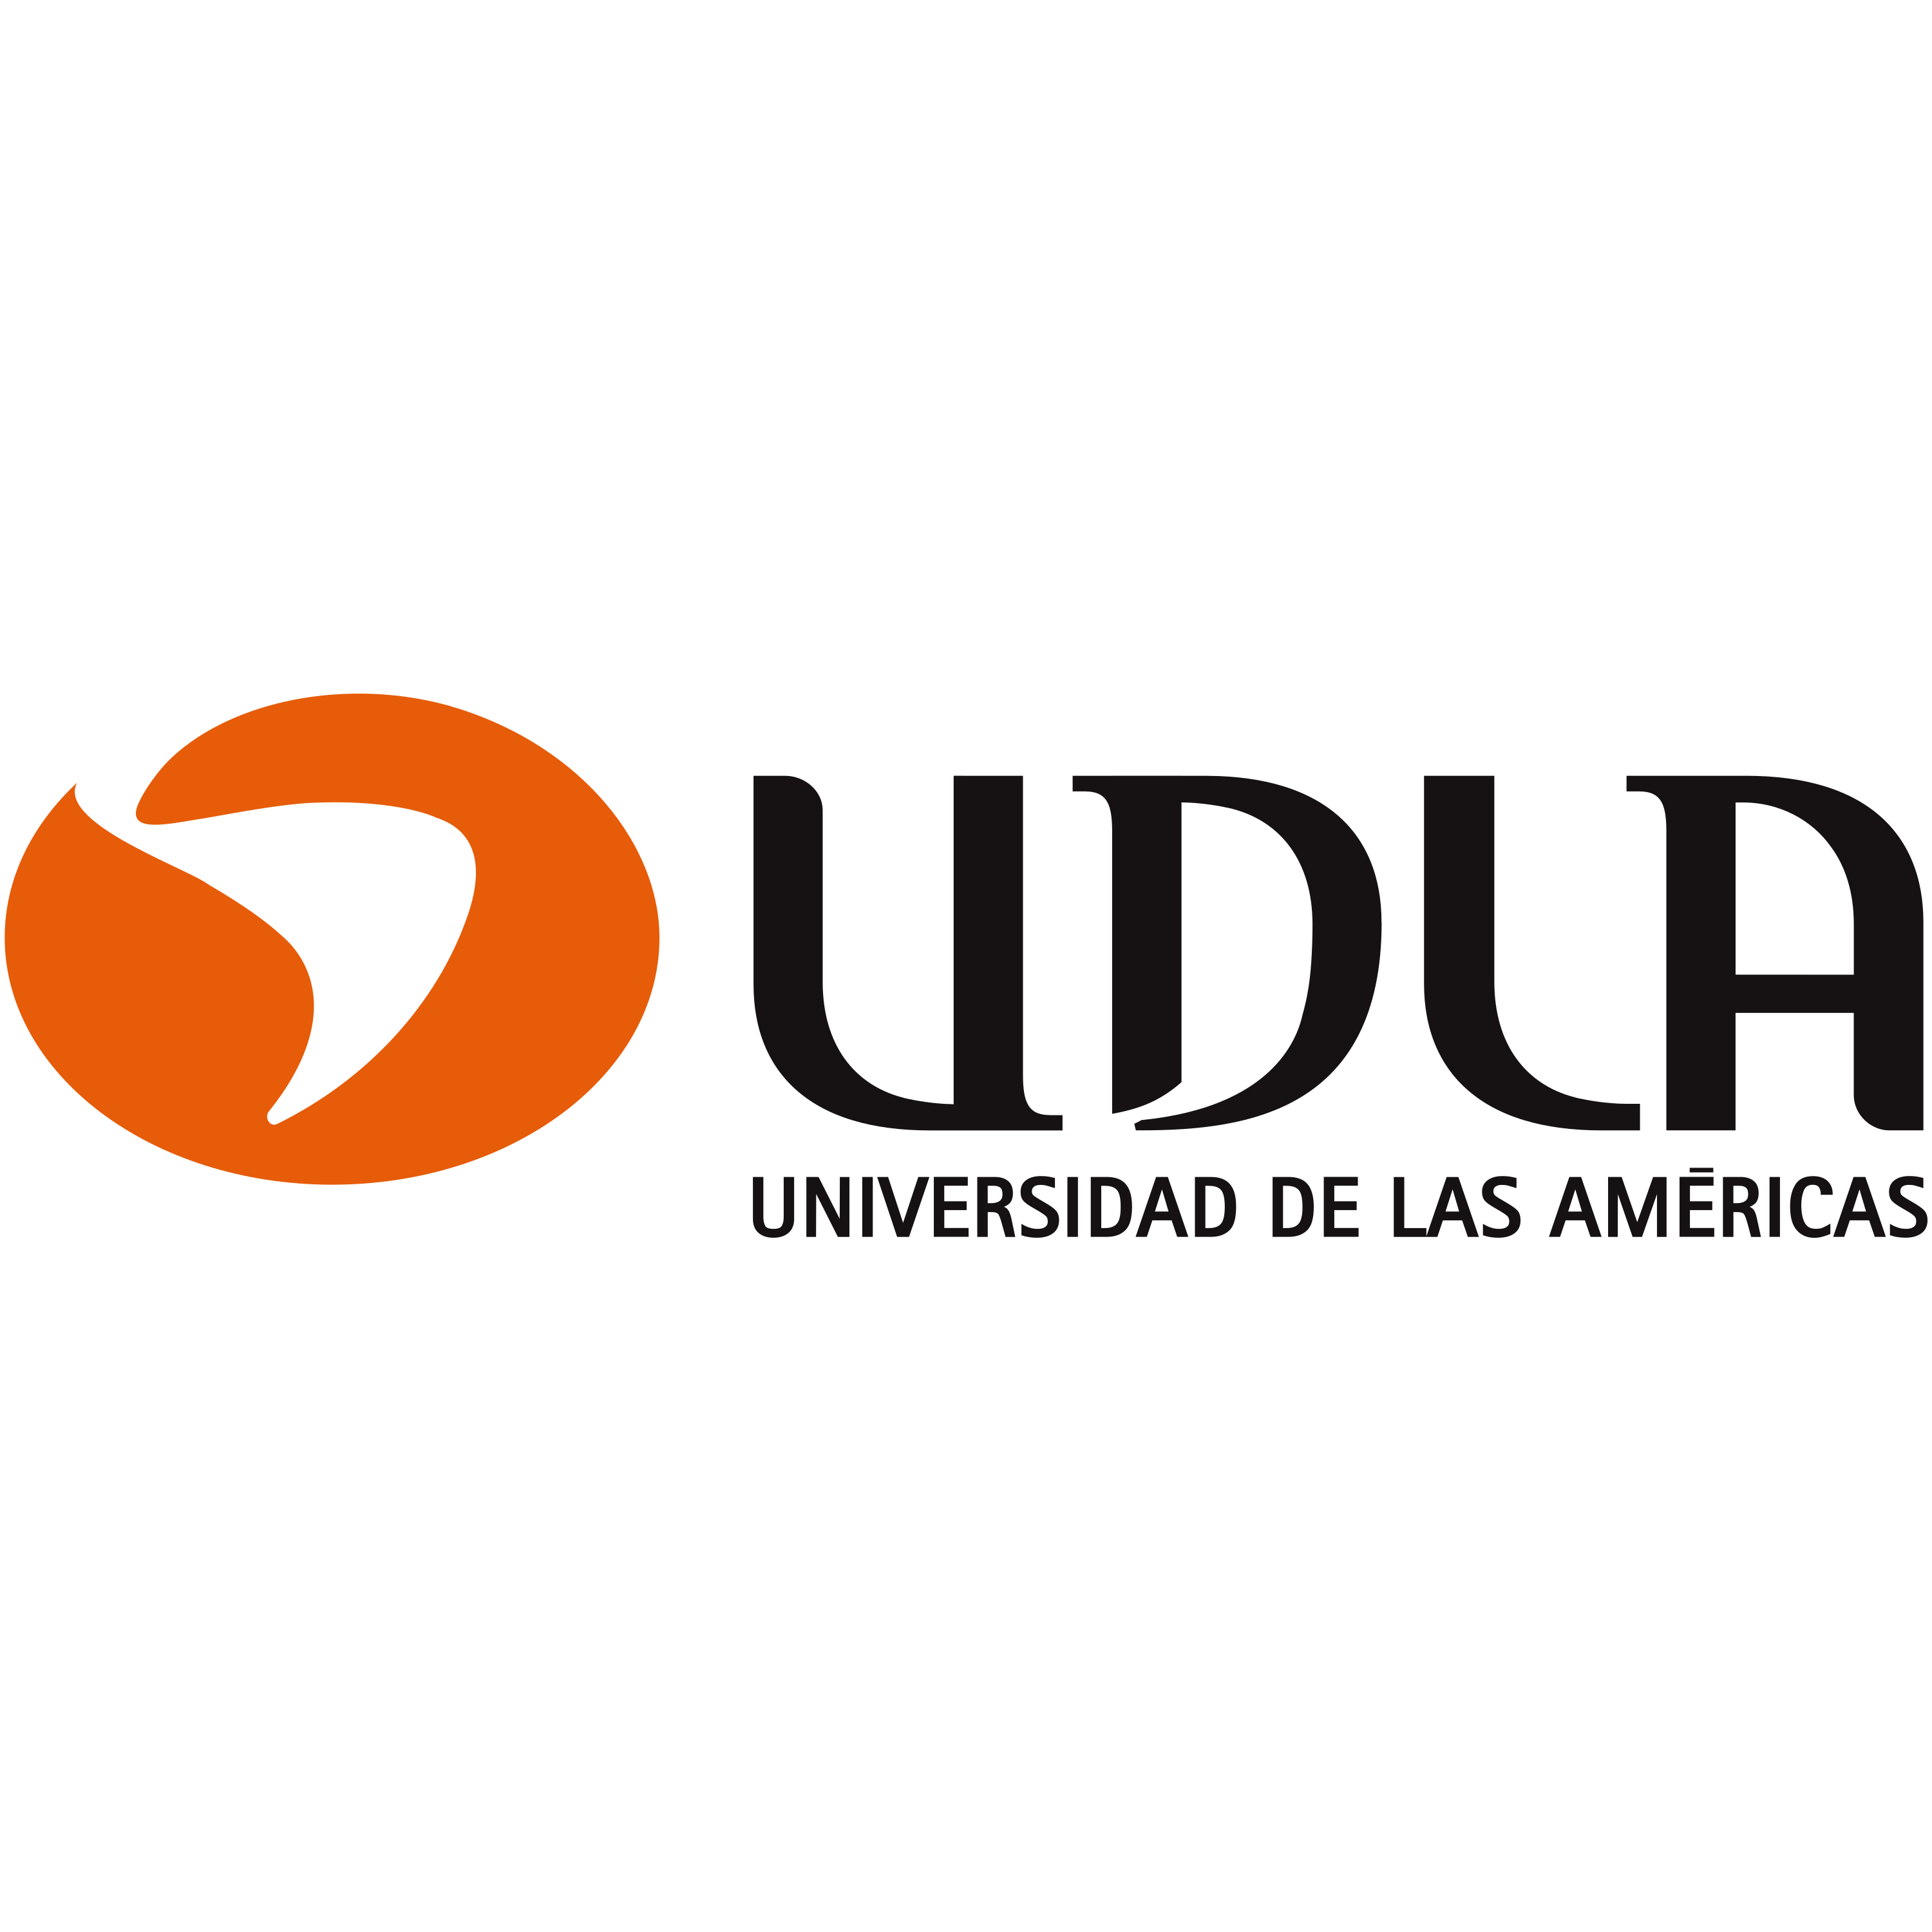 UDLA Logo  Transparent Image